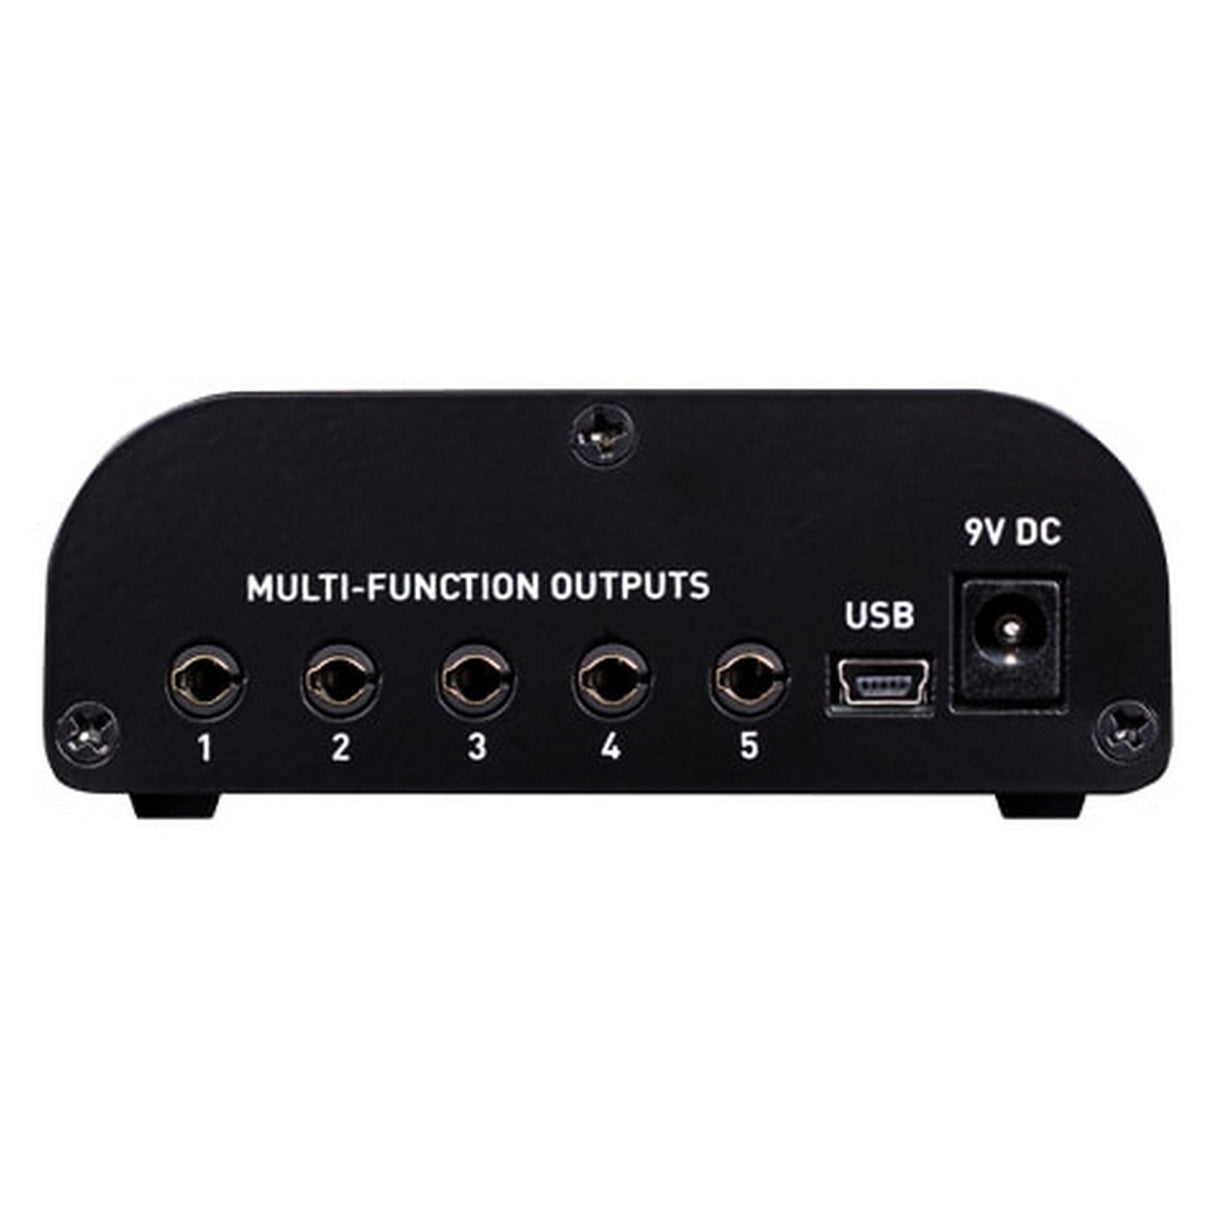 Source Audio Neuro Hub MIDI Interface